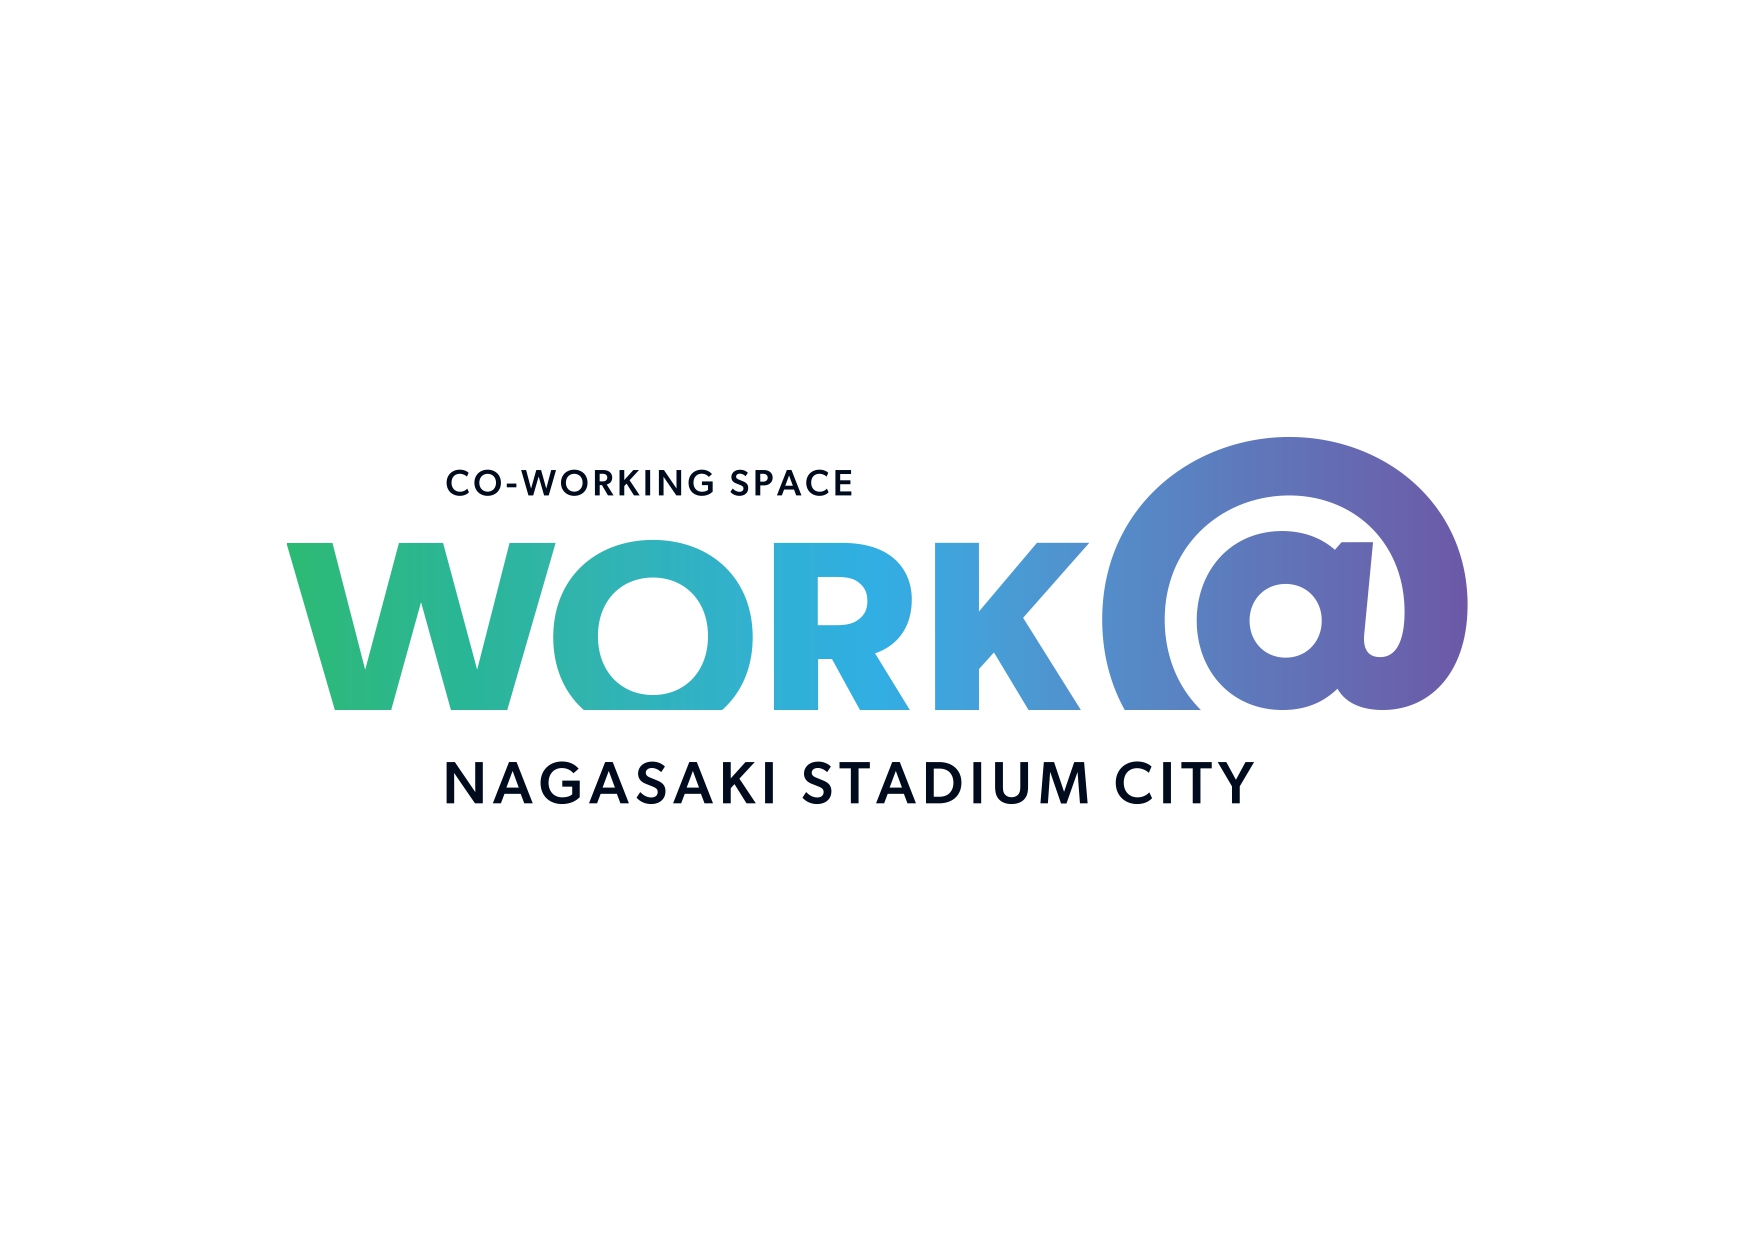 CO-WORKING SPACE WORK@NAGASAKI STADIUM CITY